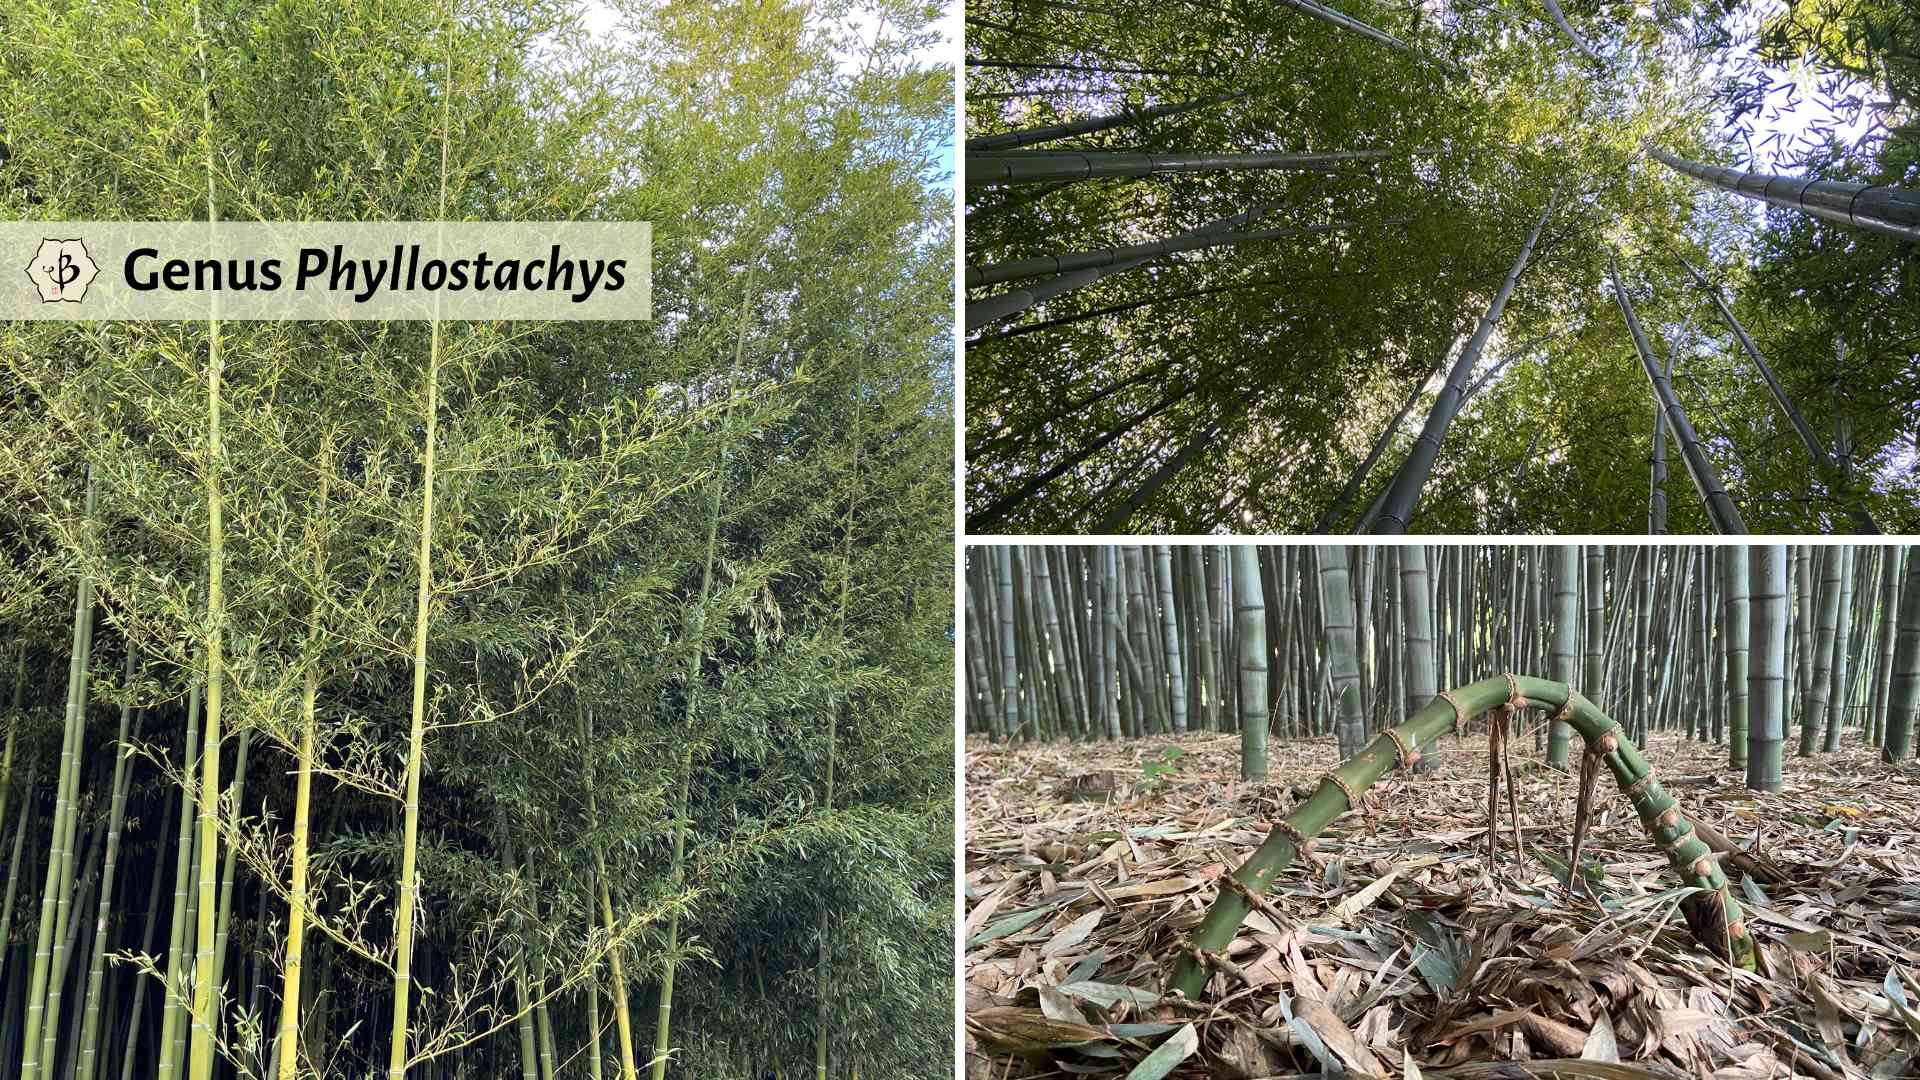 Genus Phyllostachys bamboo species